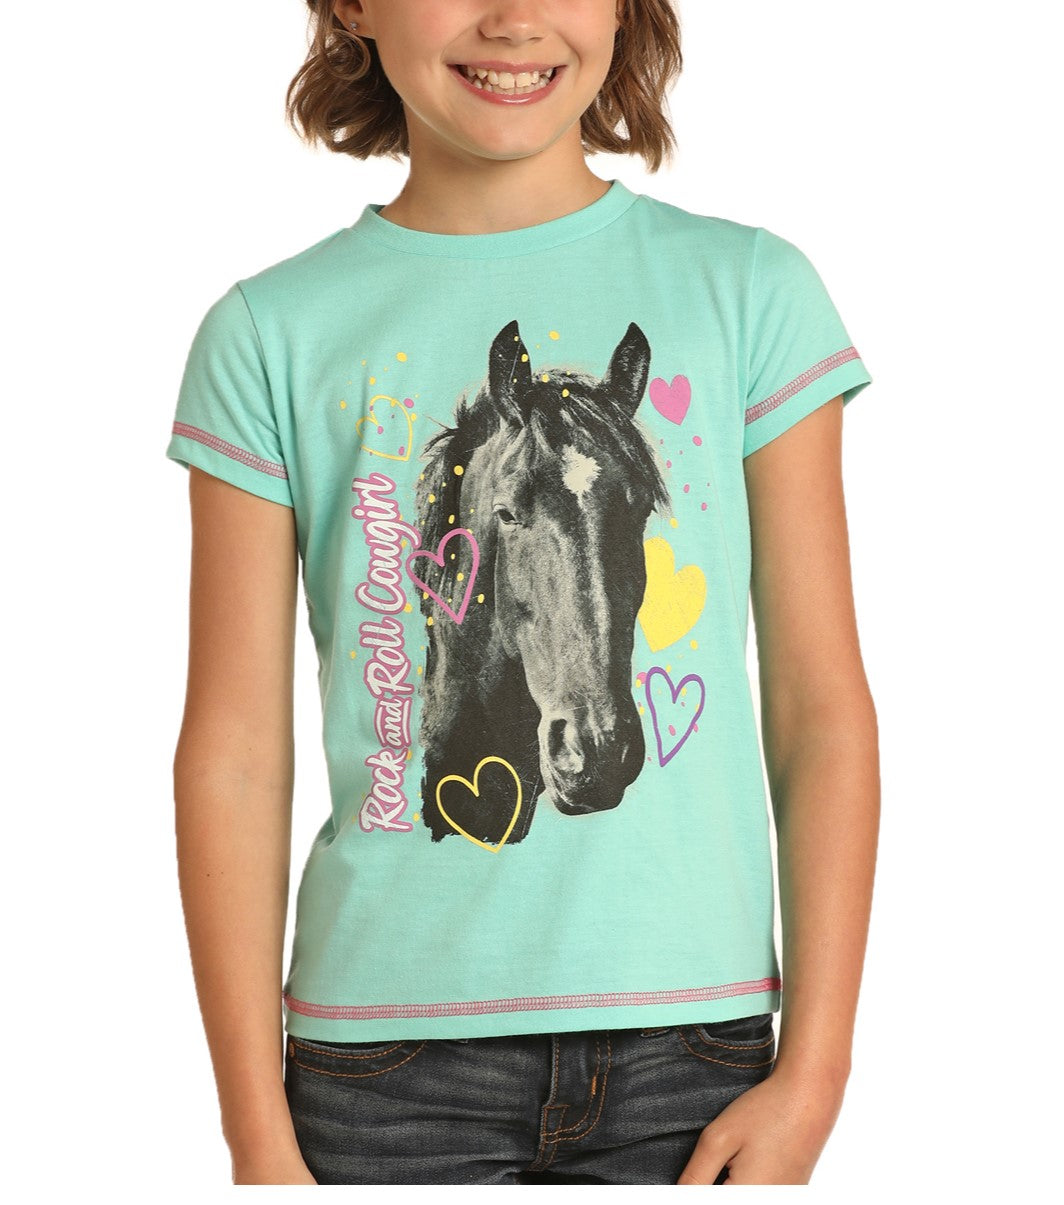 Rock & Roll Cowgirl Children's Horse Graphic Seafoam T-Shirt G3T4645